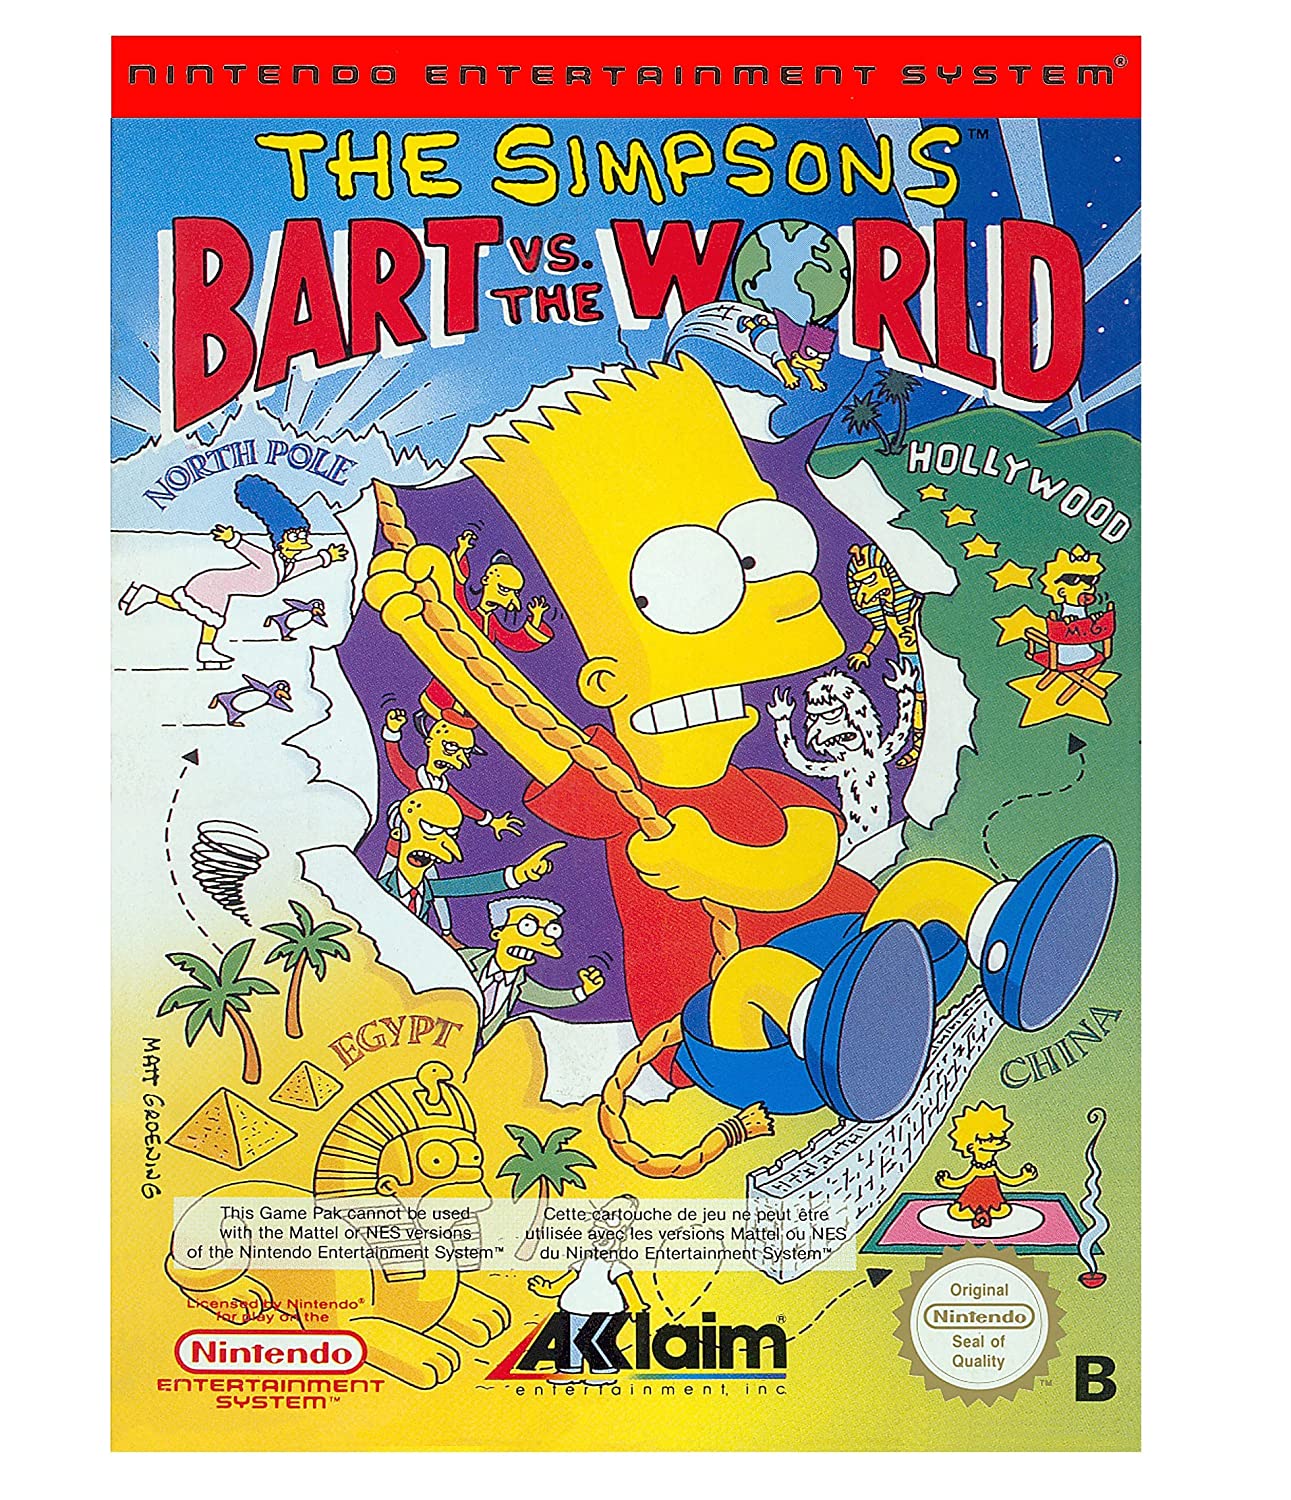 The Simpsons Bart vs. the World - [NES]